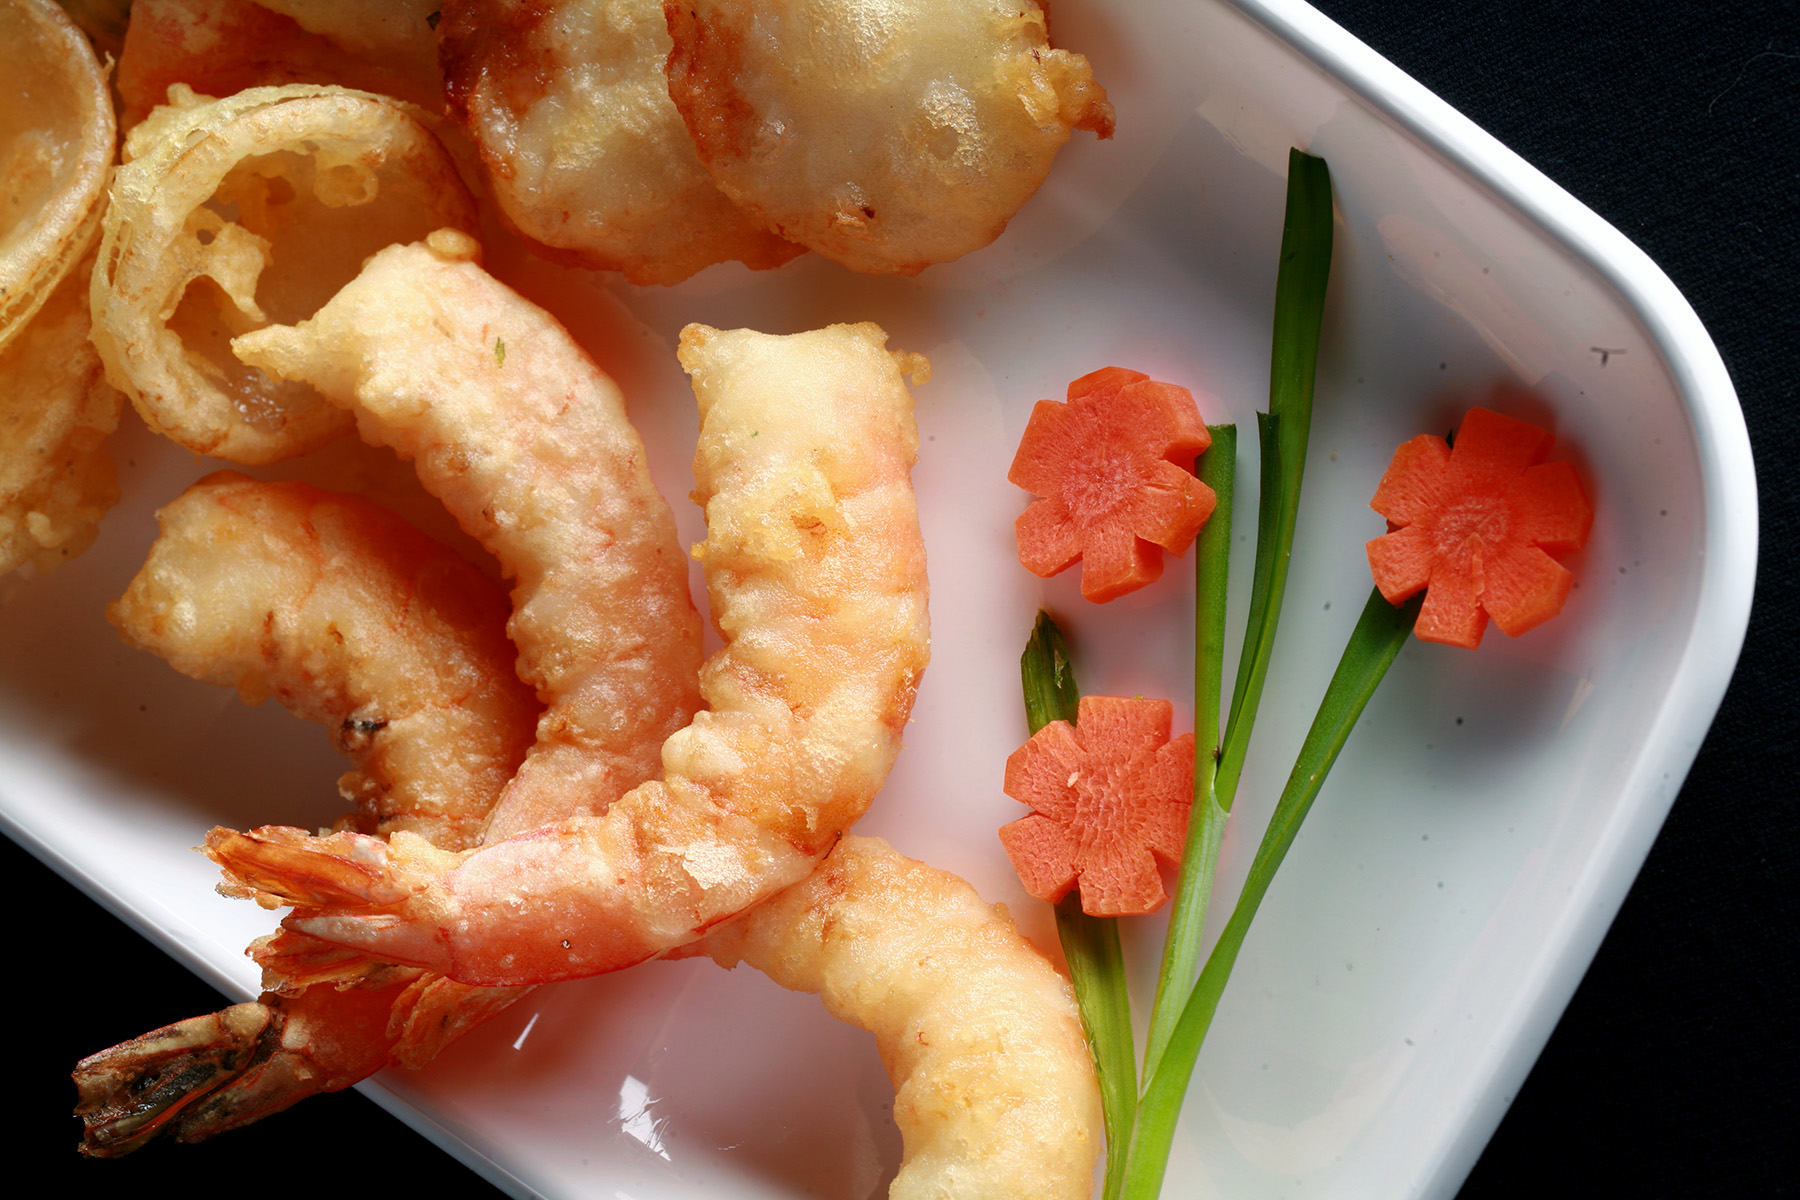 A tray of gluten-free tempura shrimp and vegetables.